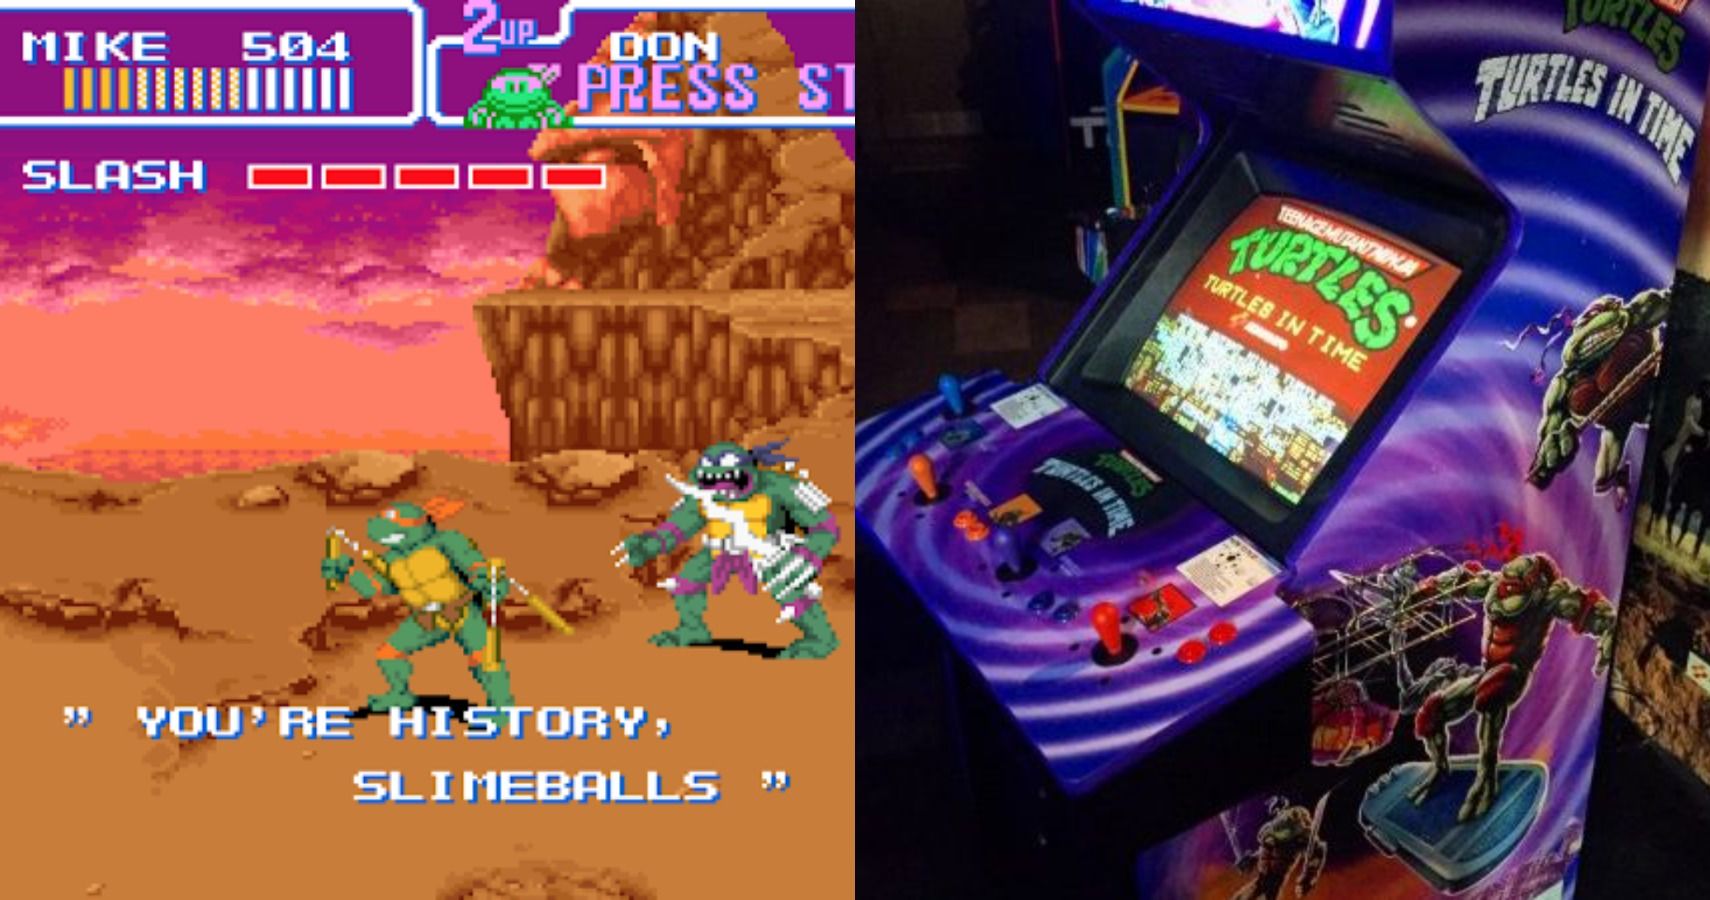 TMNT Turtles in Time Arcade SNES Differences Slash arcade machine split image